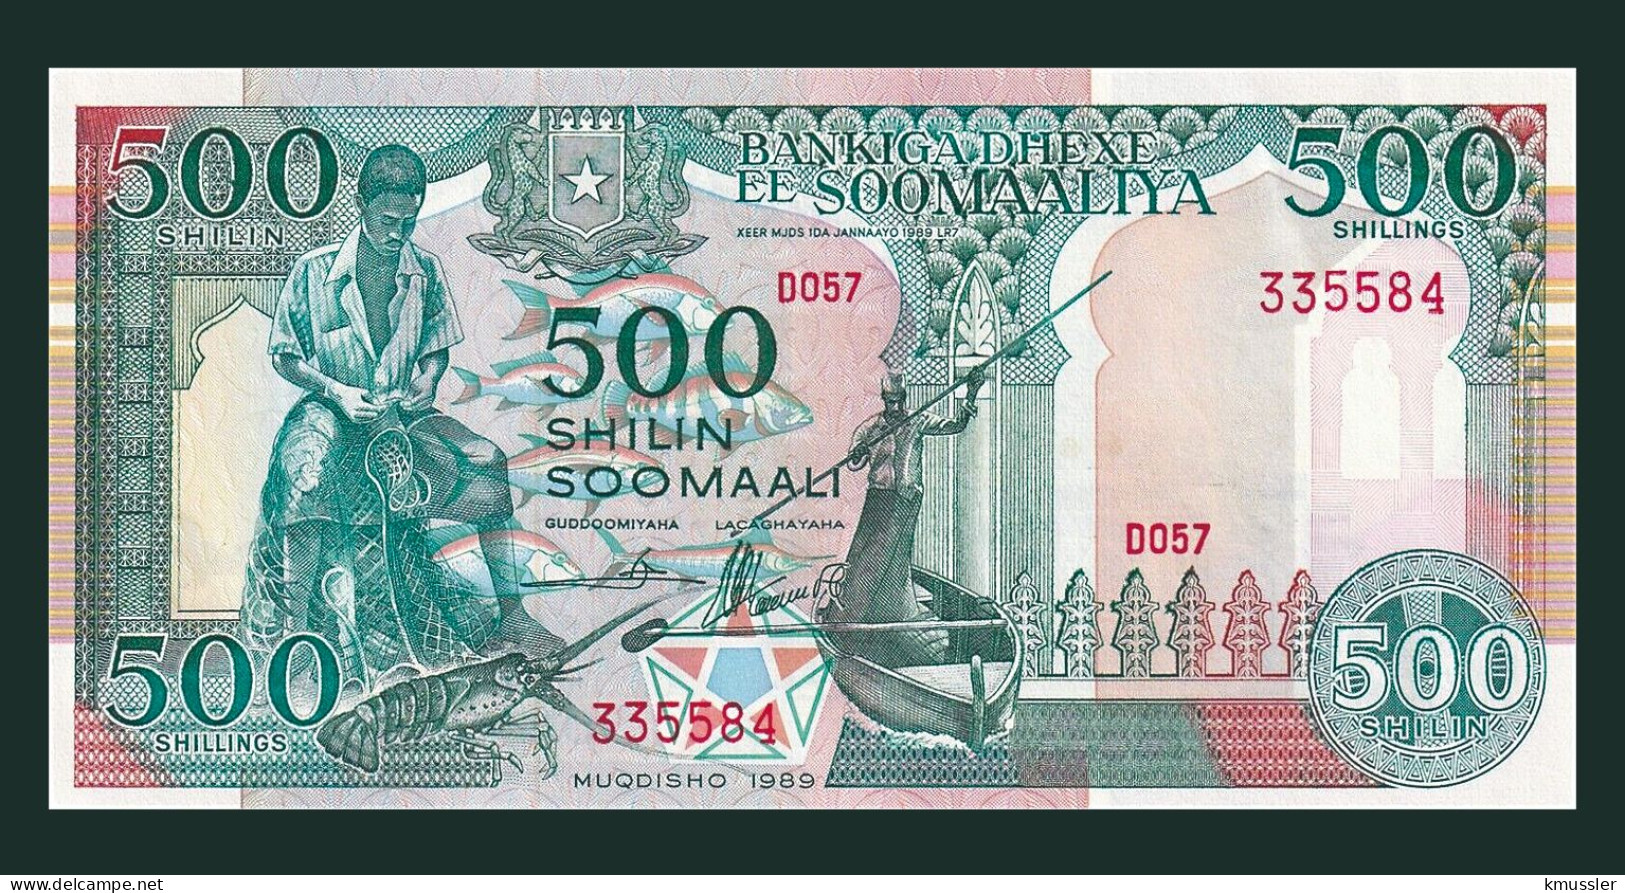 # # # Banknote Aus Somalia 500 Shillings 1989 (P-36) UNC # # # - Somalie